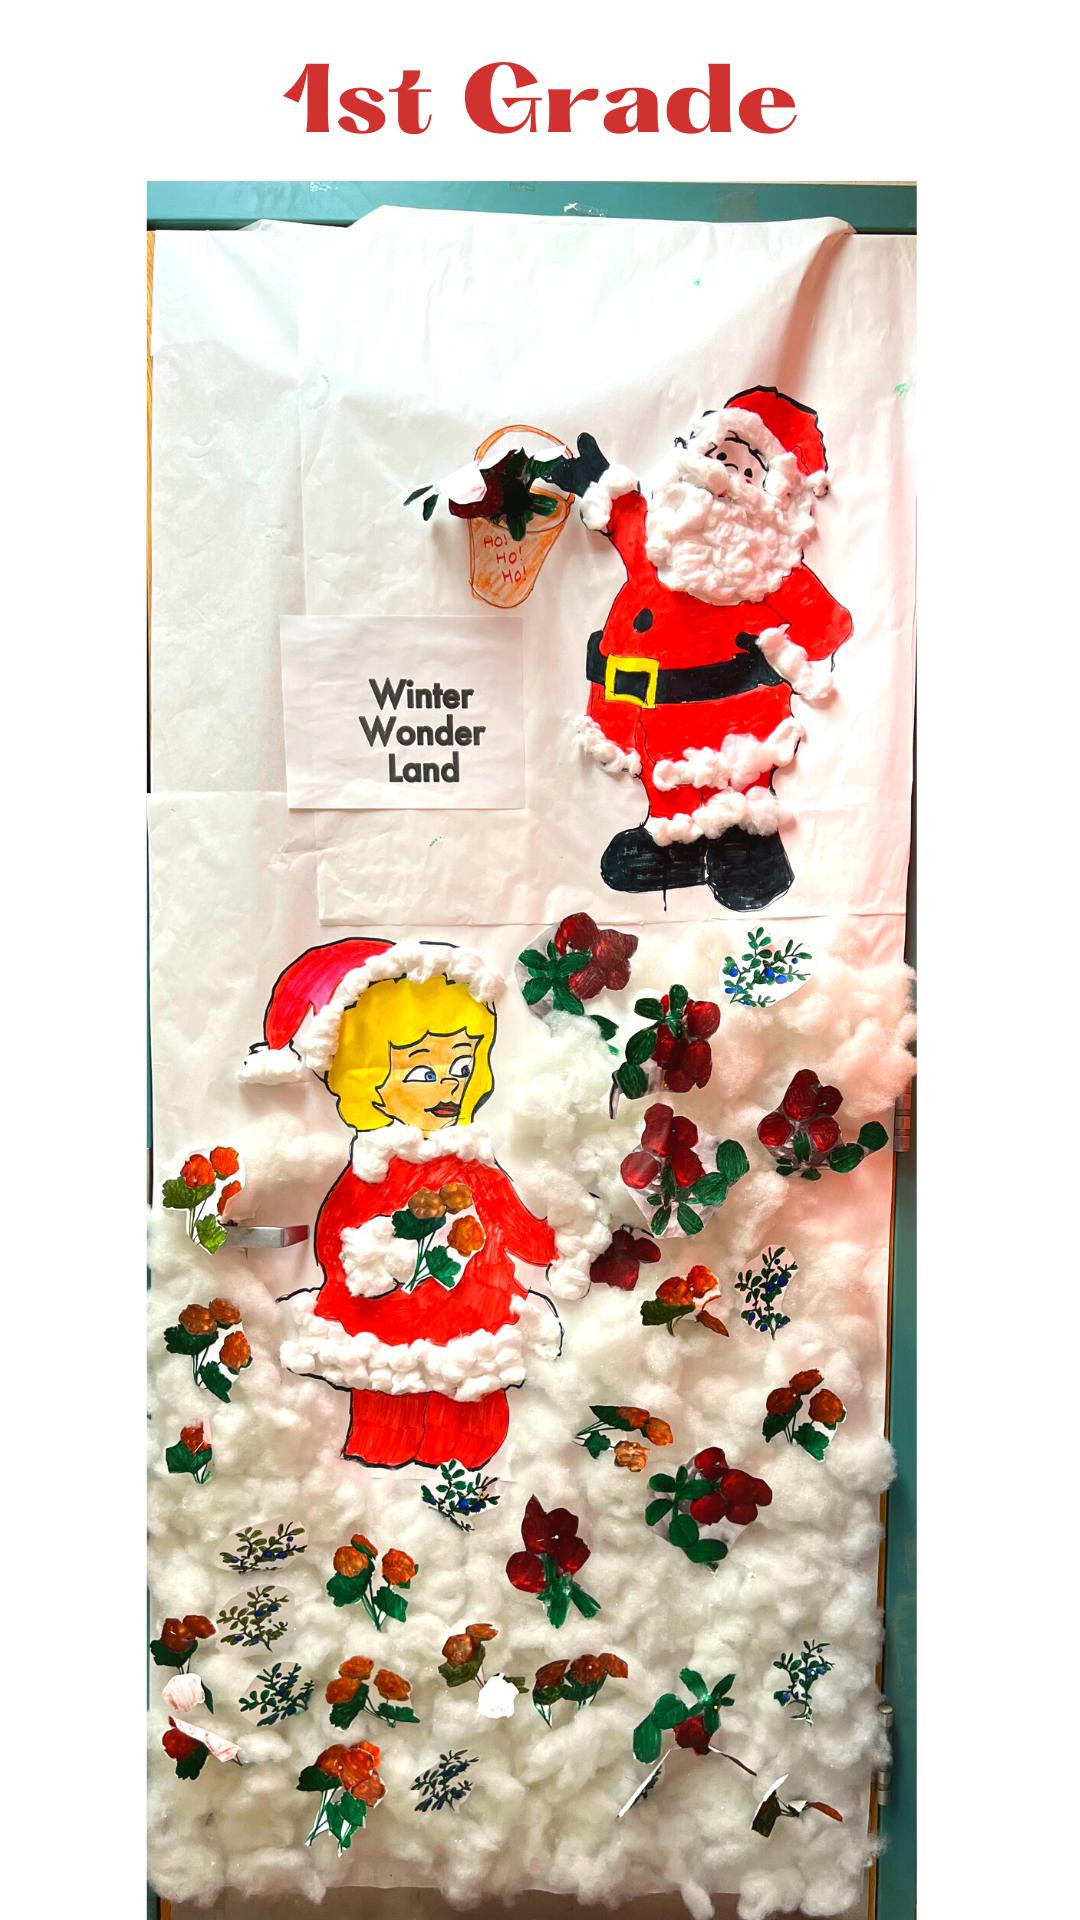 1st grade winter wonderland with Santa and Mrs. Claus